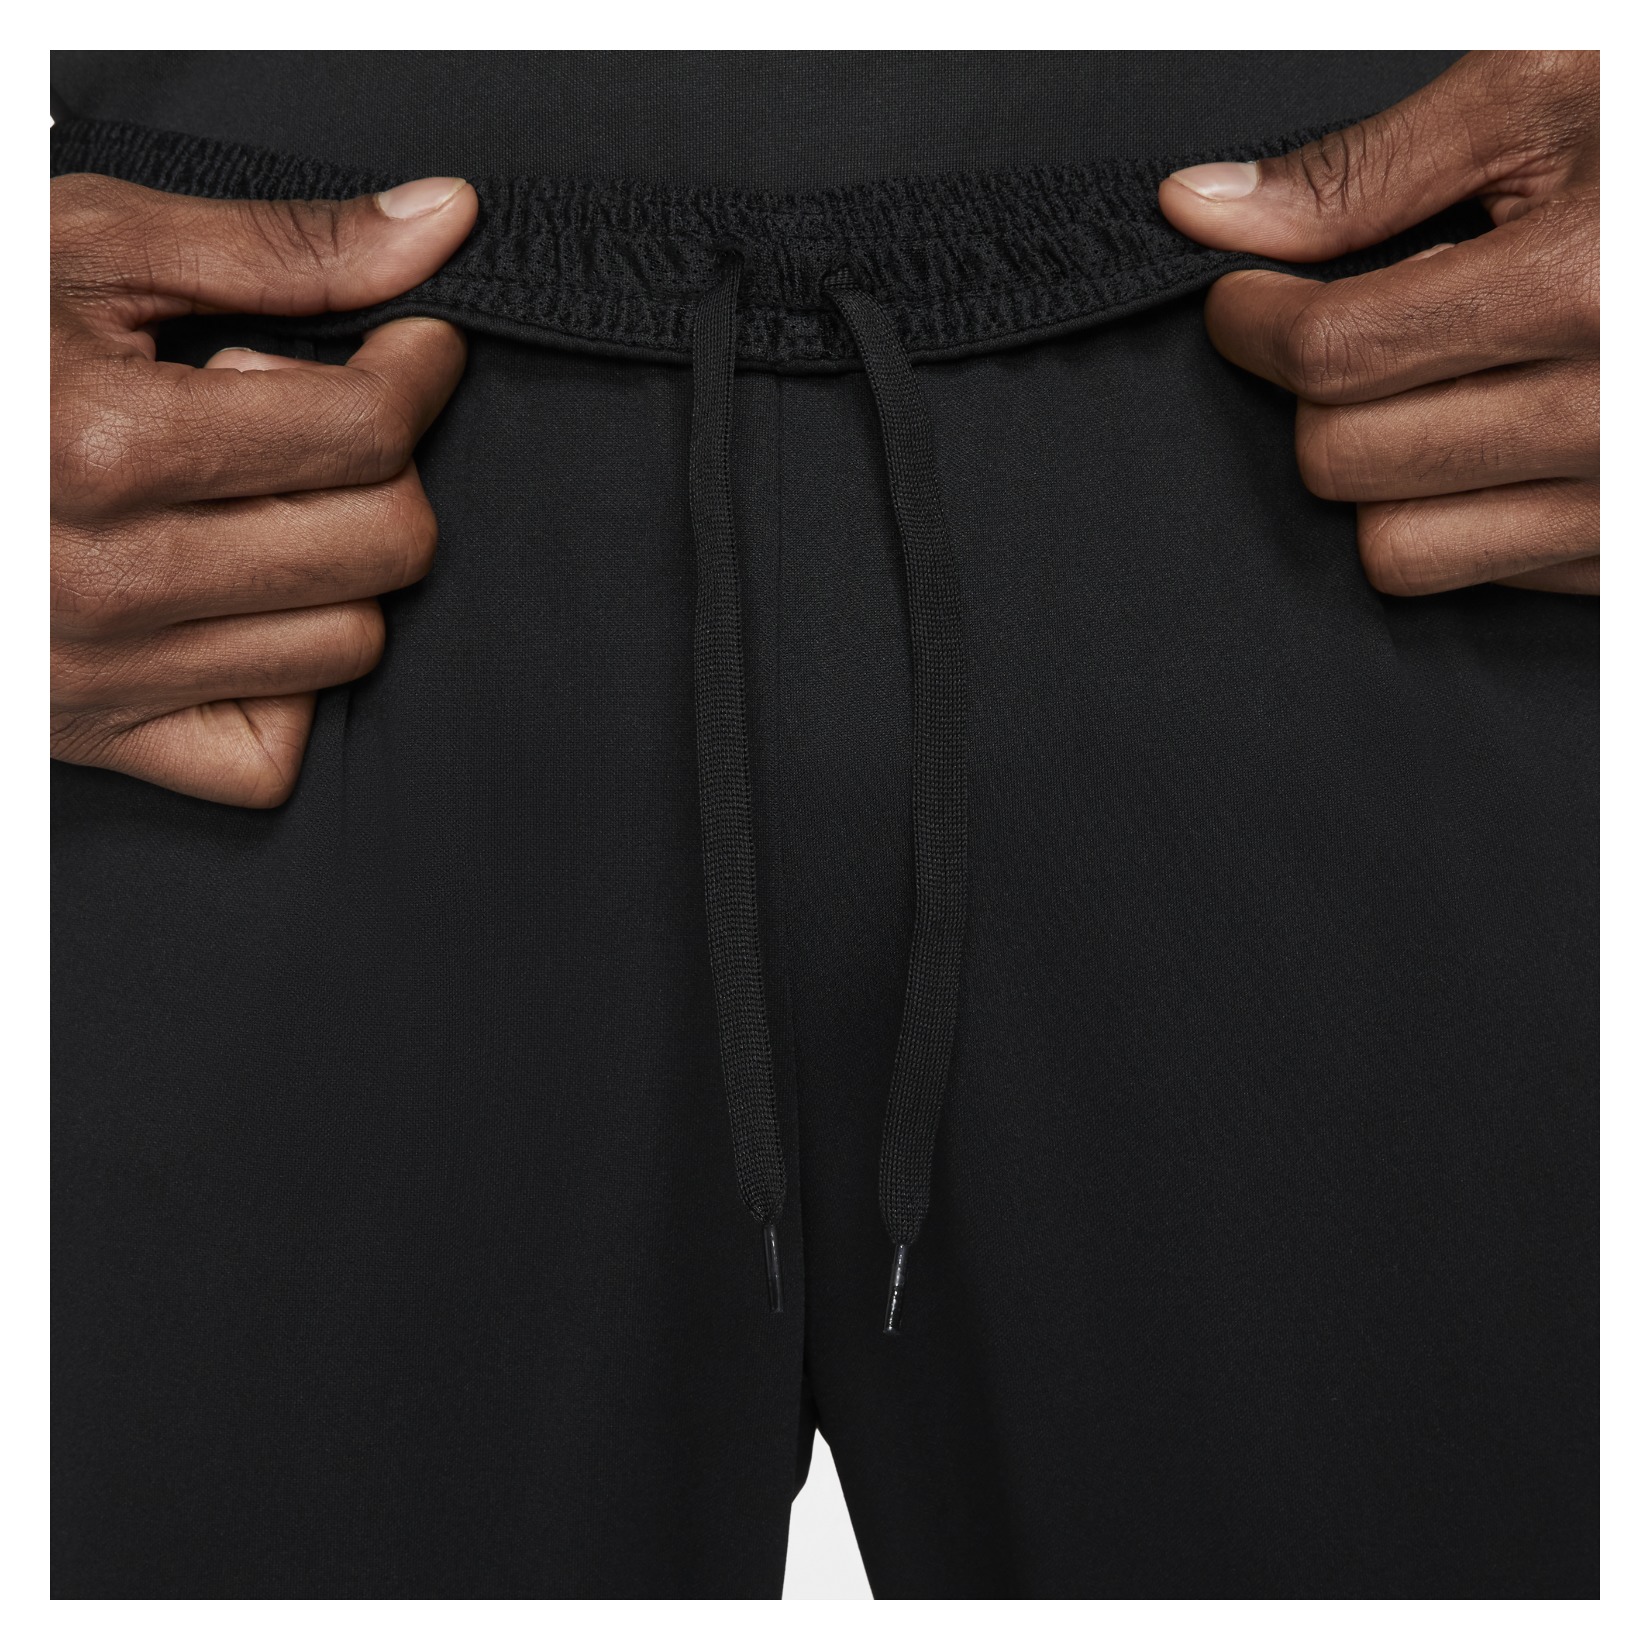 Nike Academy 21 Tech Knit Pants (M) - Kitlocker.com